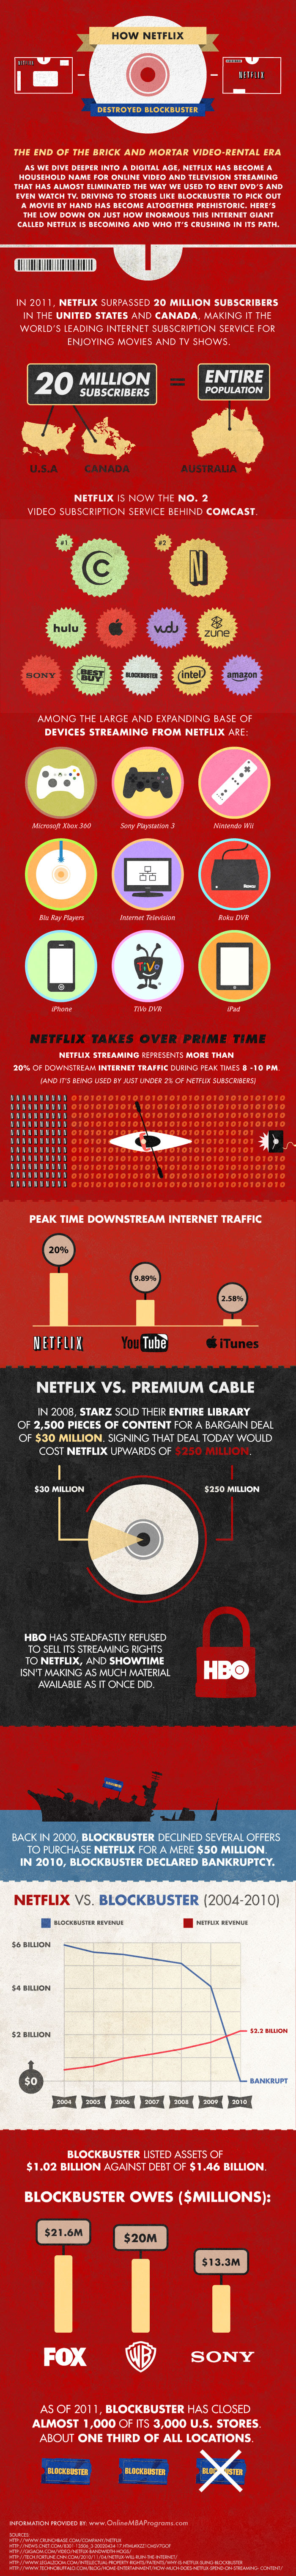 How Netflix is Destroying Blockbuster